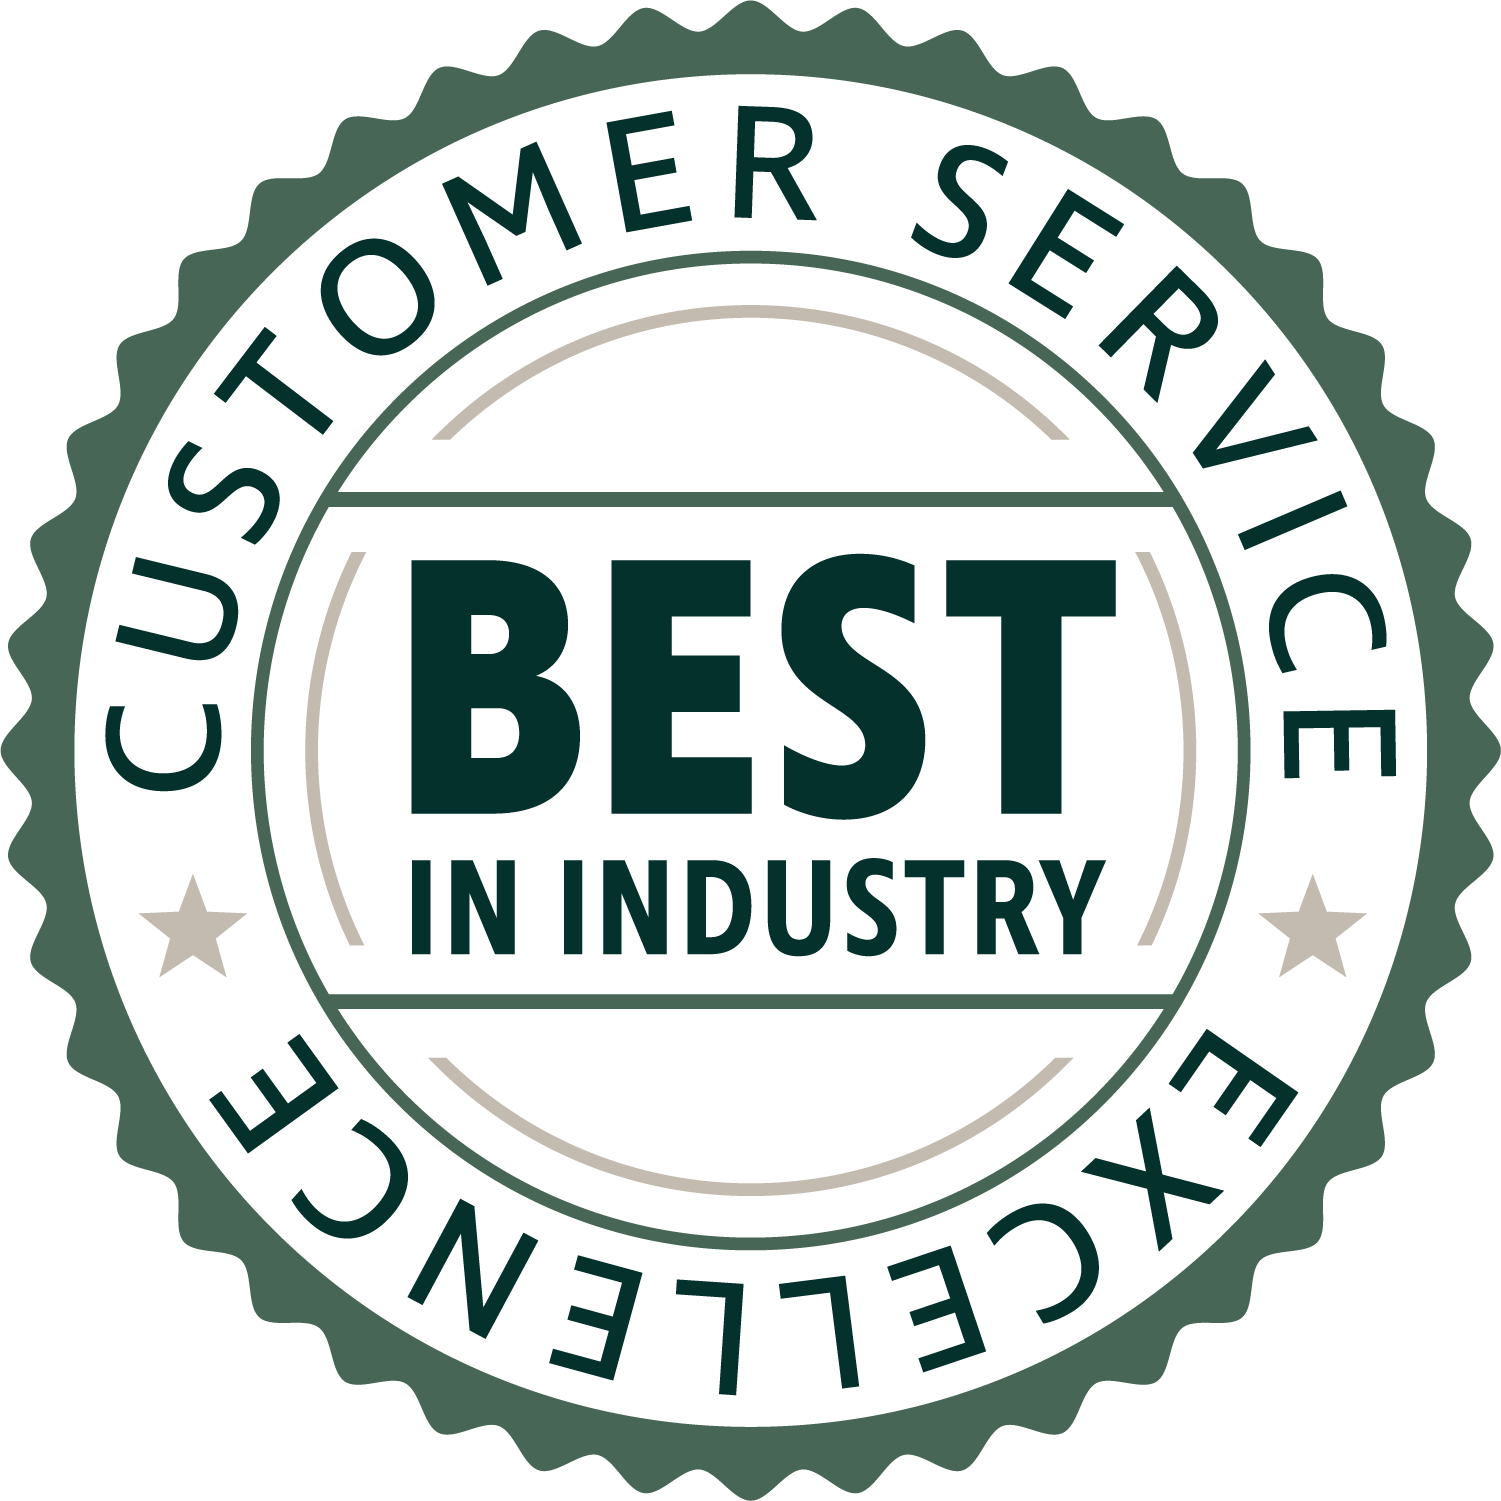 Best in Industry: Customer Service Badge